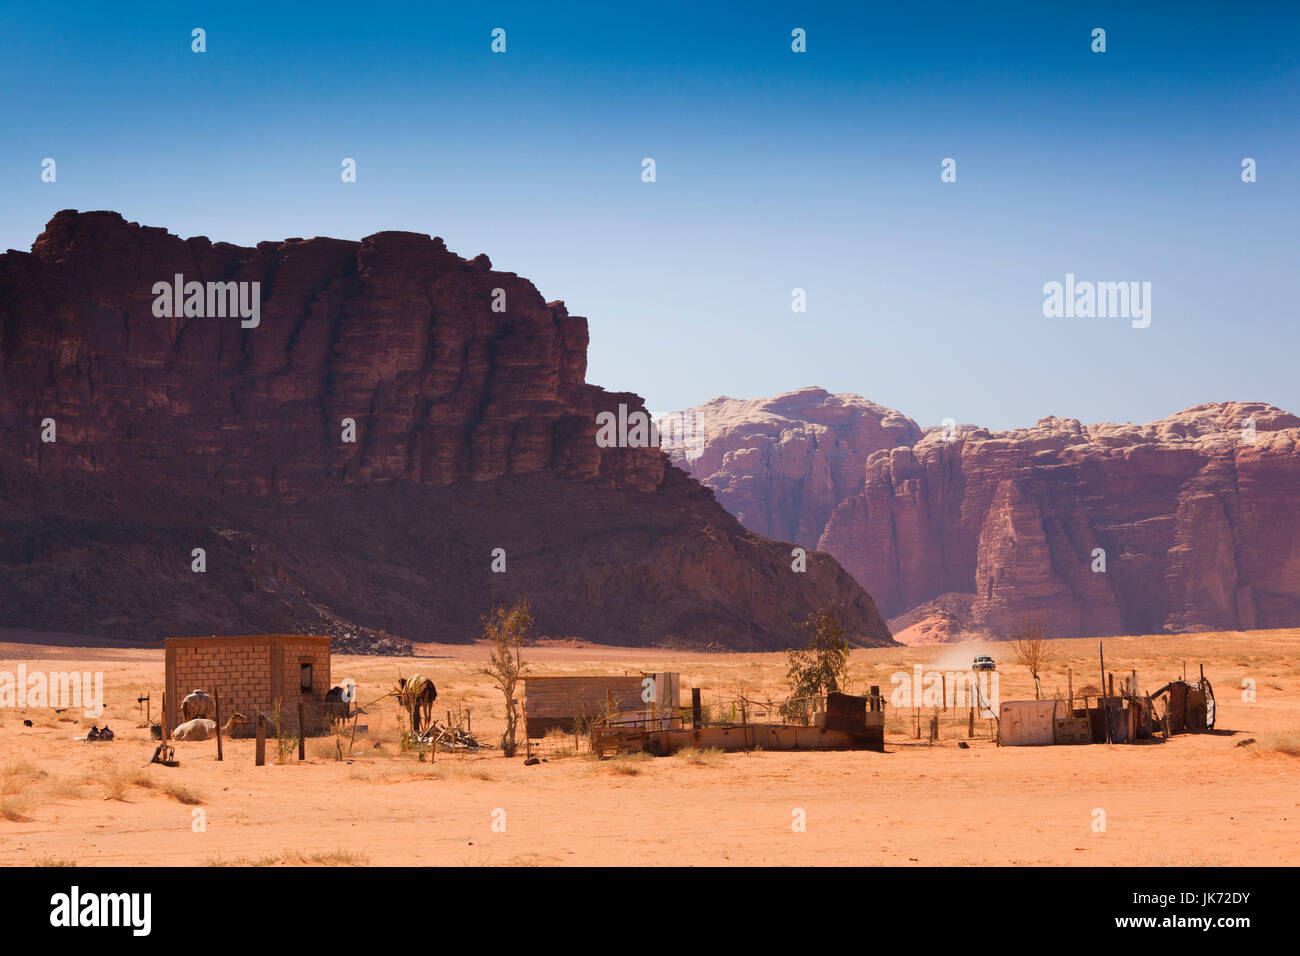 Jordan, Wadi Rum, Rum village, desert settlement Stock Photo